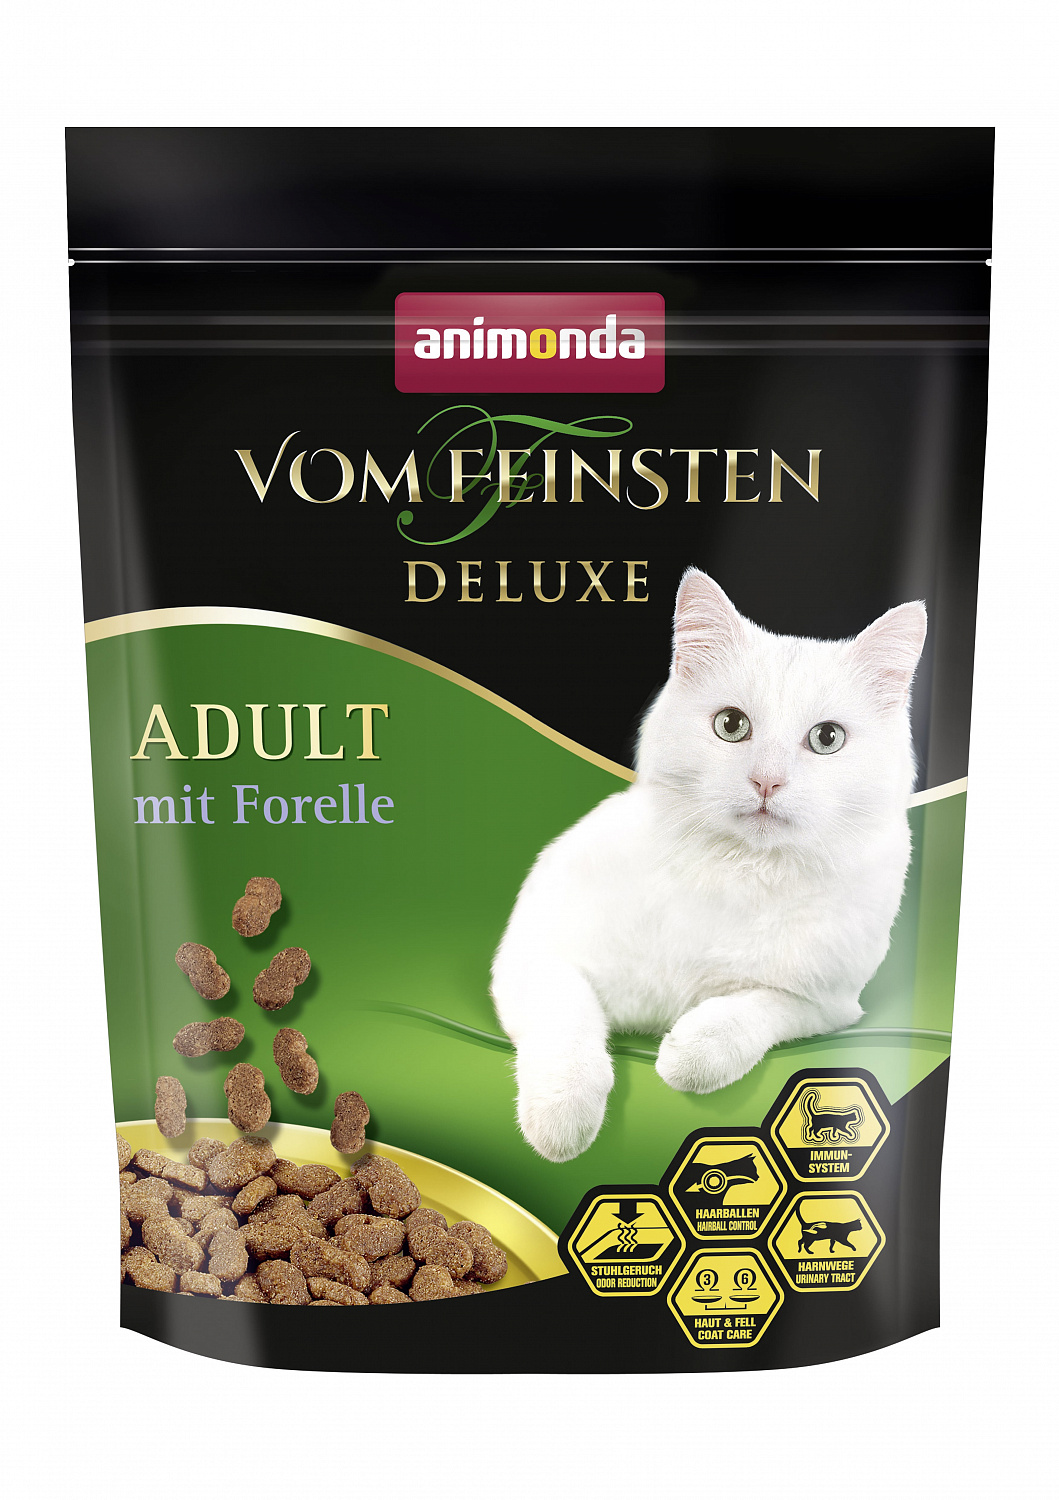 Сухой корм для взрослых кошек Animonda Vom Feinsten Deluxe Adult mit Forelle, с форелью